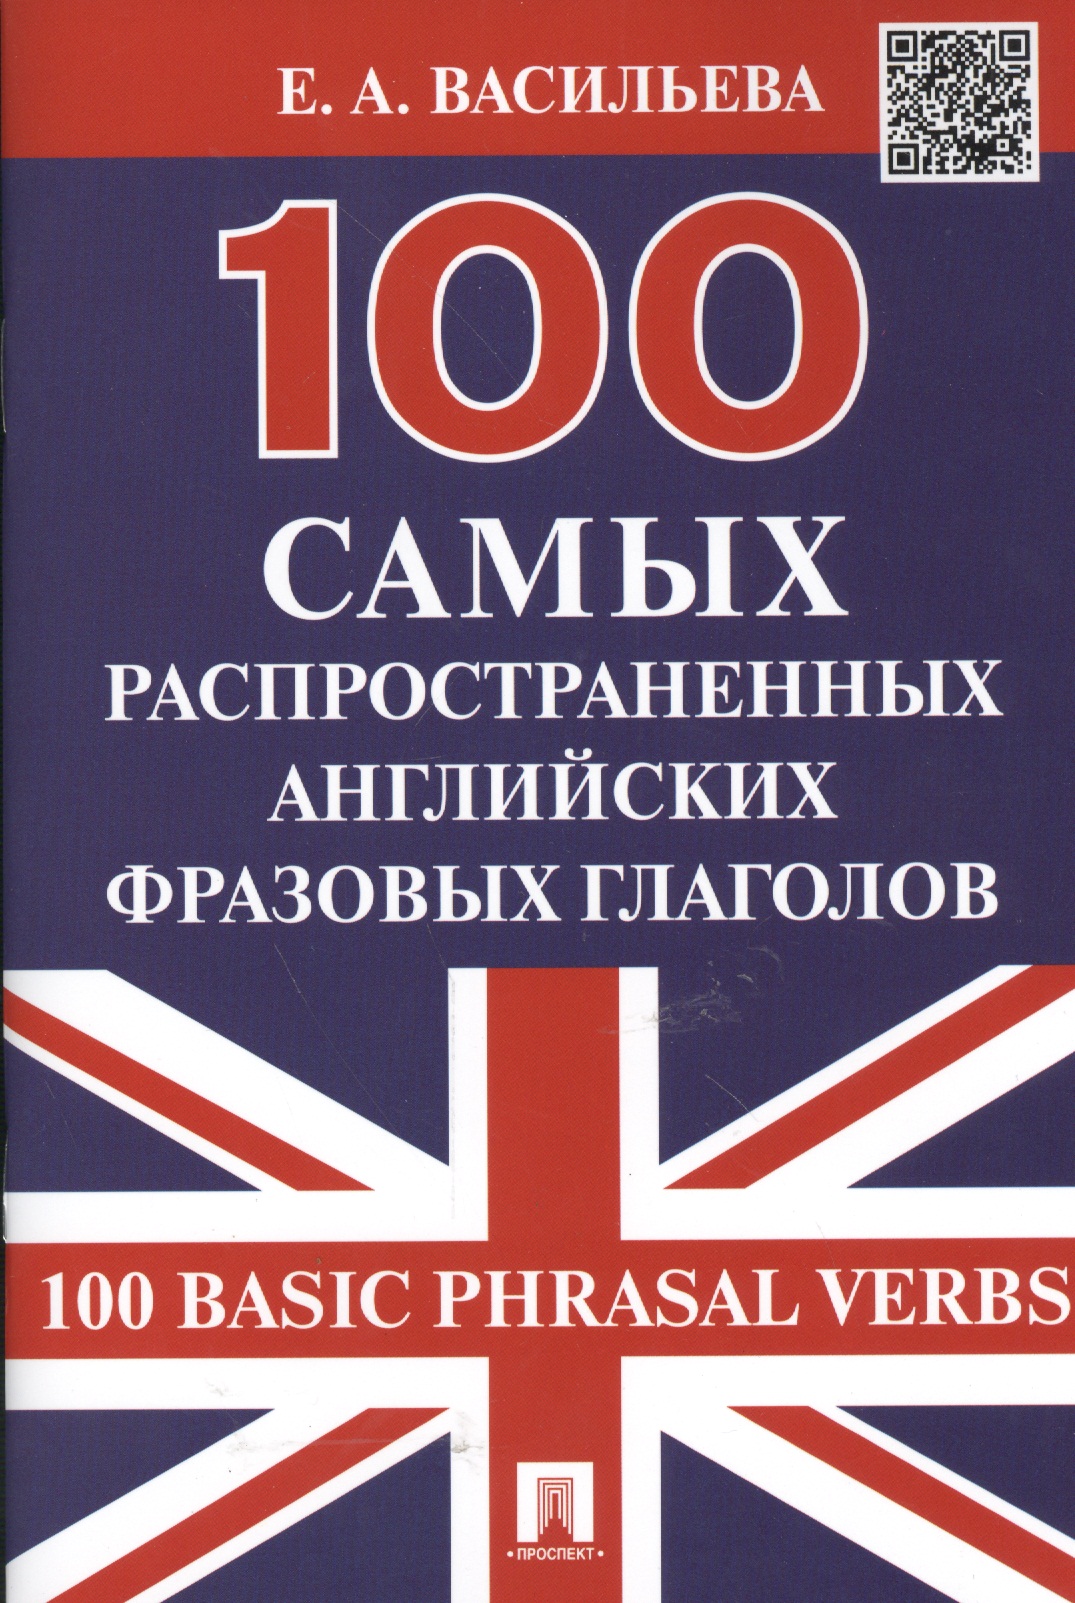 100      (100 Basic Phrasal Verbs)